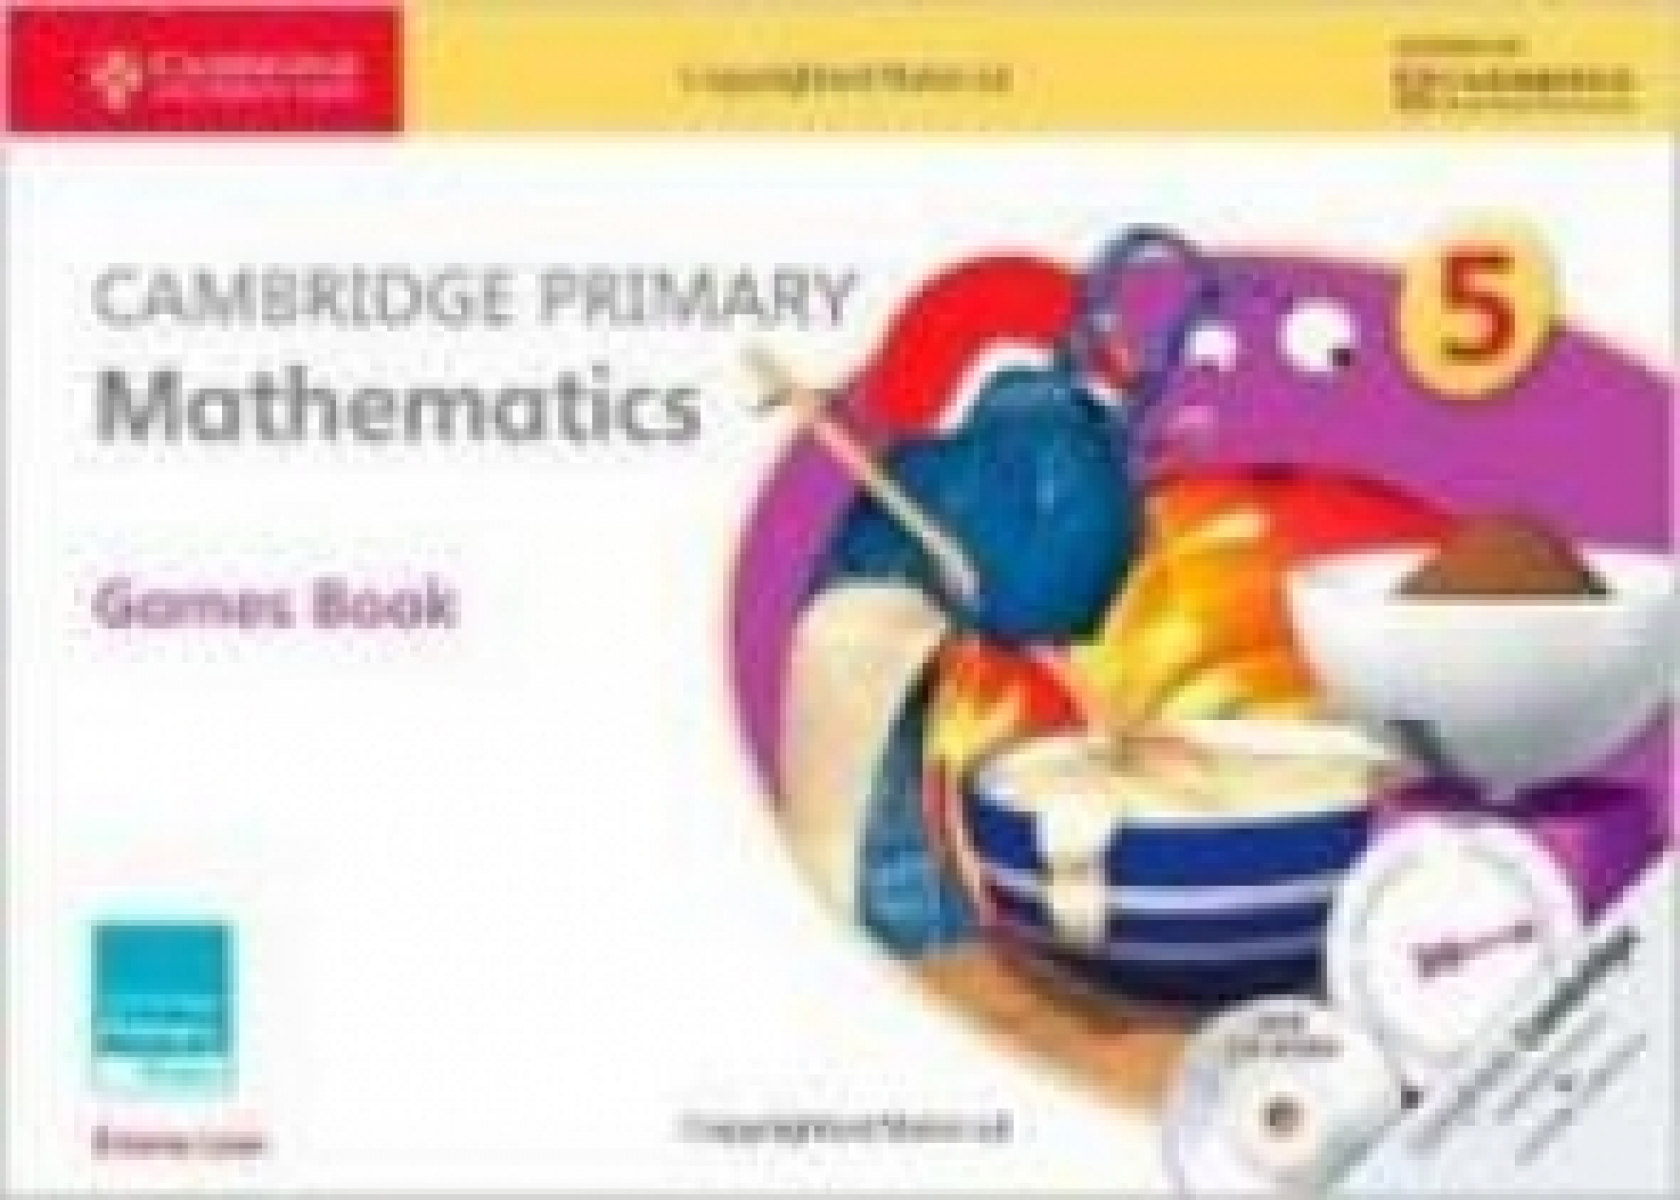 Low Cambridge Primary Mathematics Stage 5 Games book 